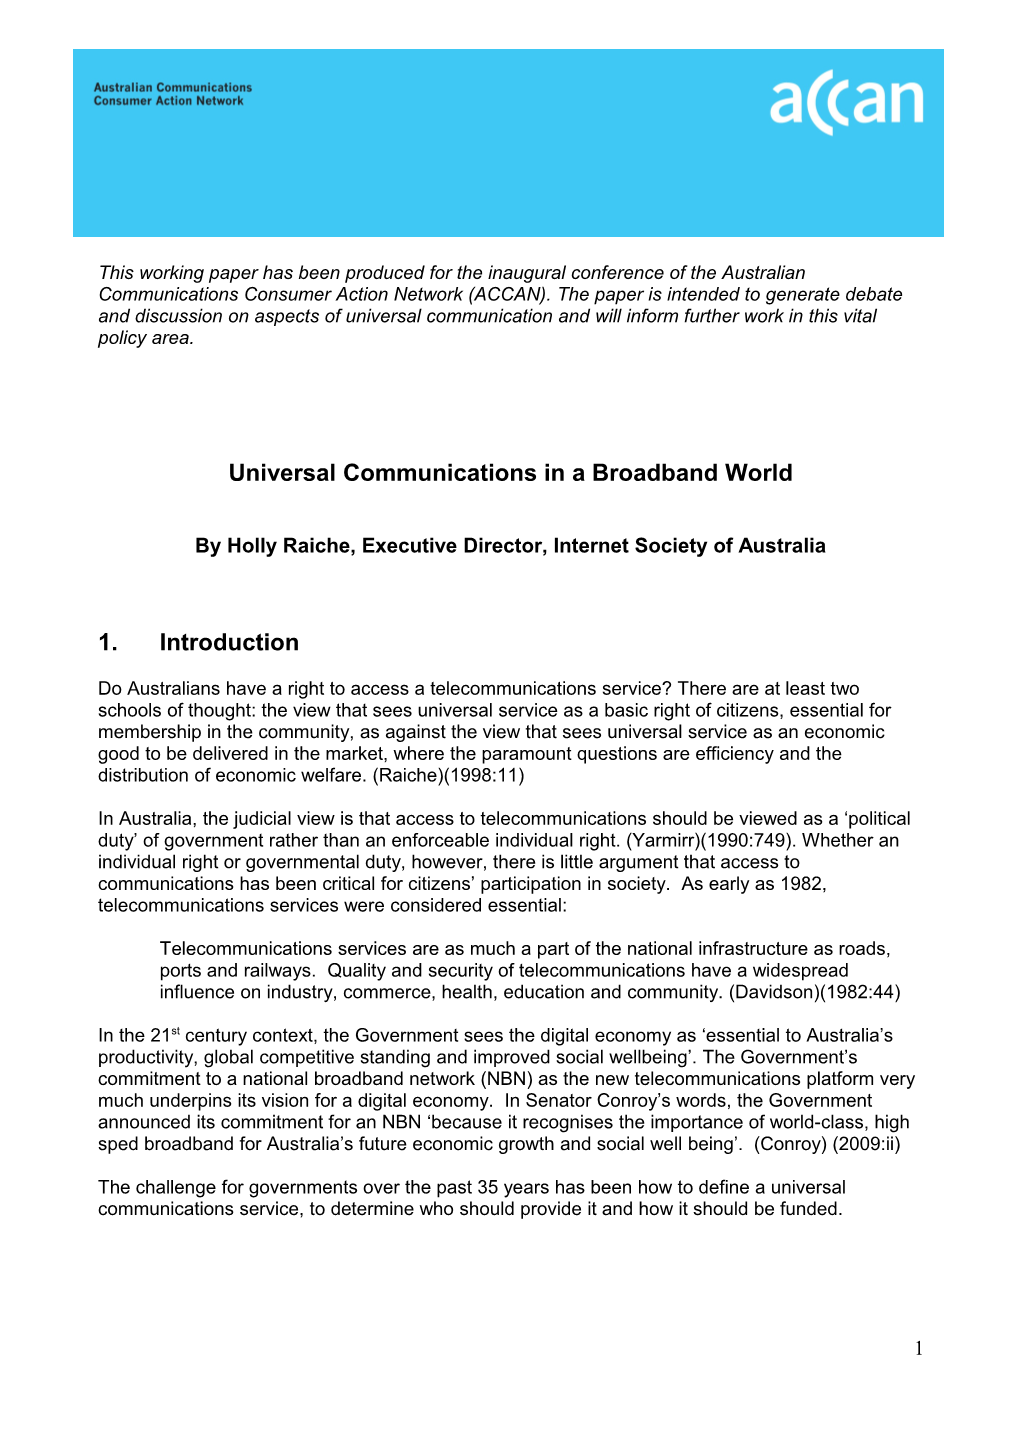 Universal Communications in a Broadband World